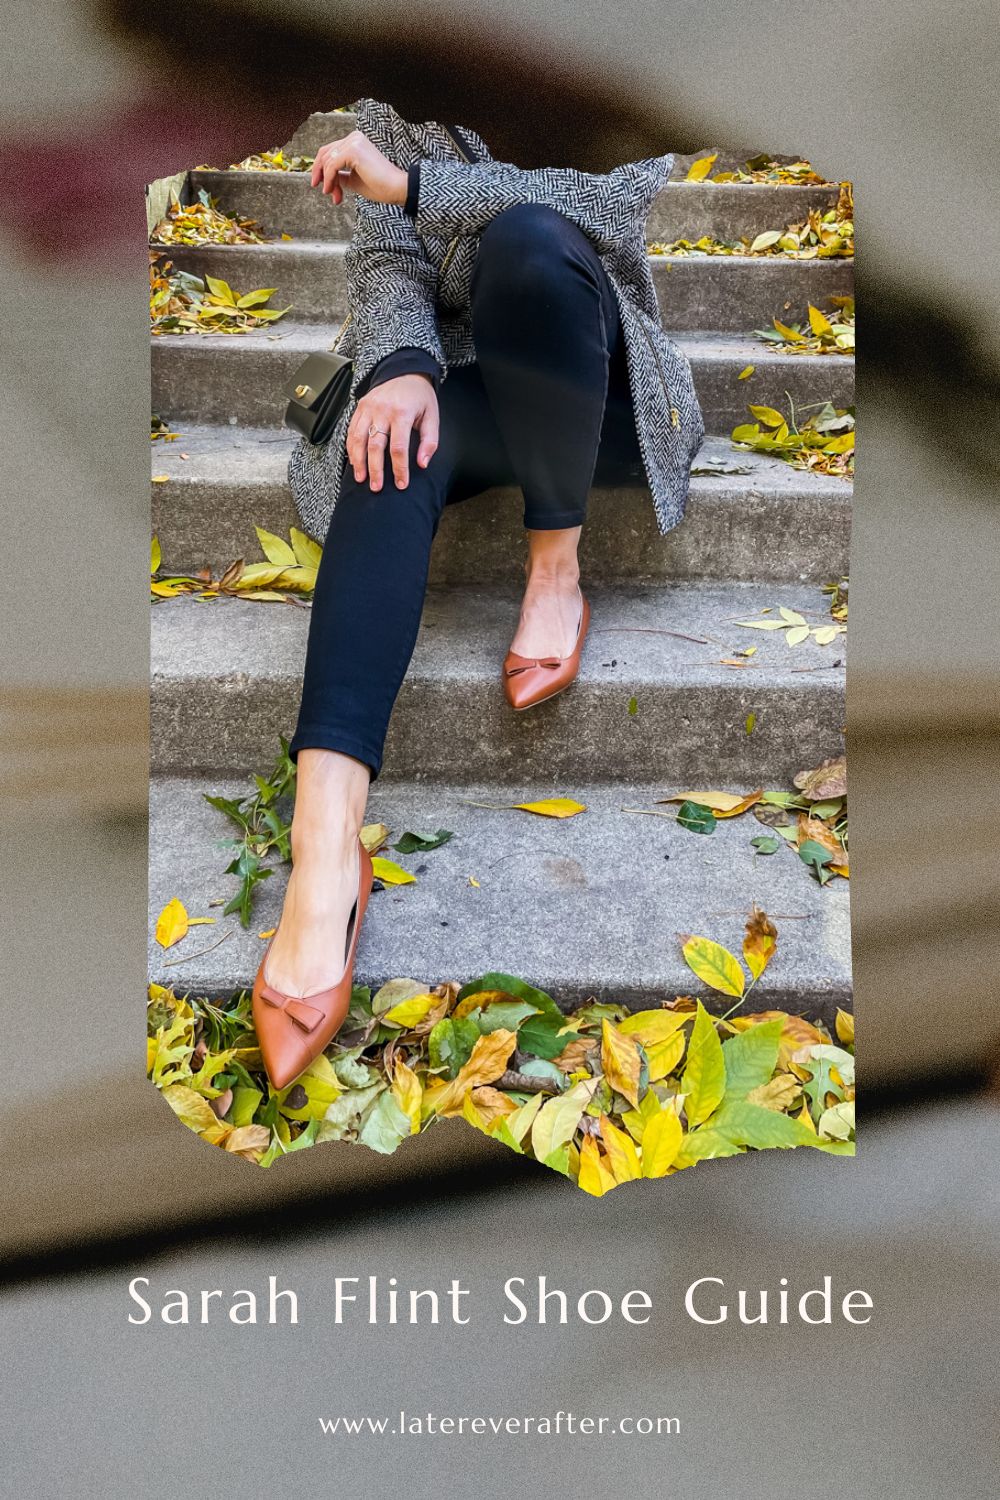 Natalie Flats shoes shown on leafy steps as part of a Sarah Flint Shoe Guide